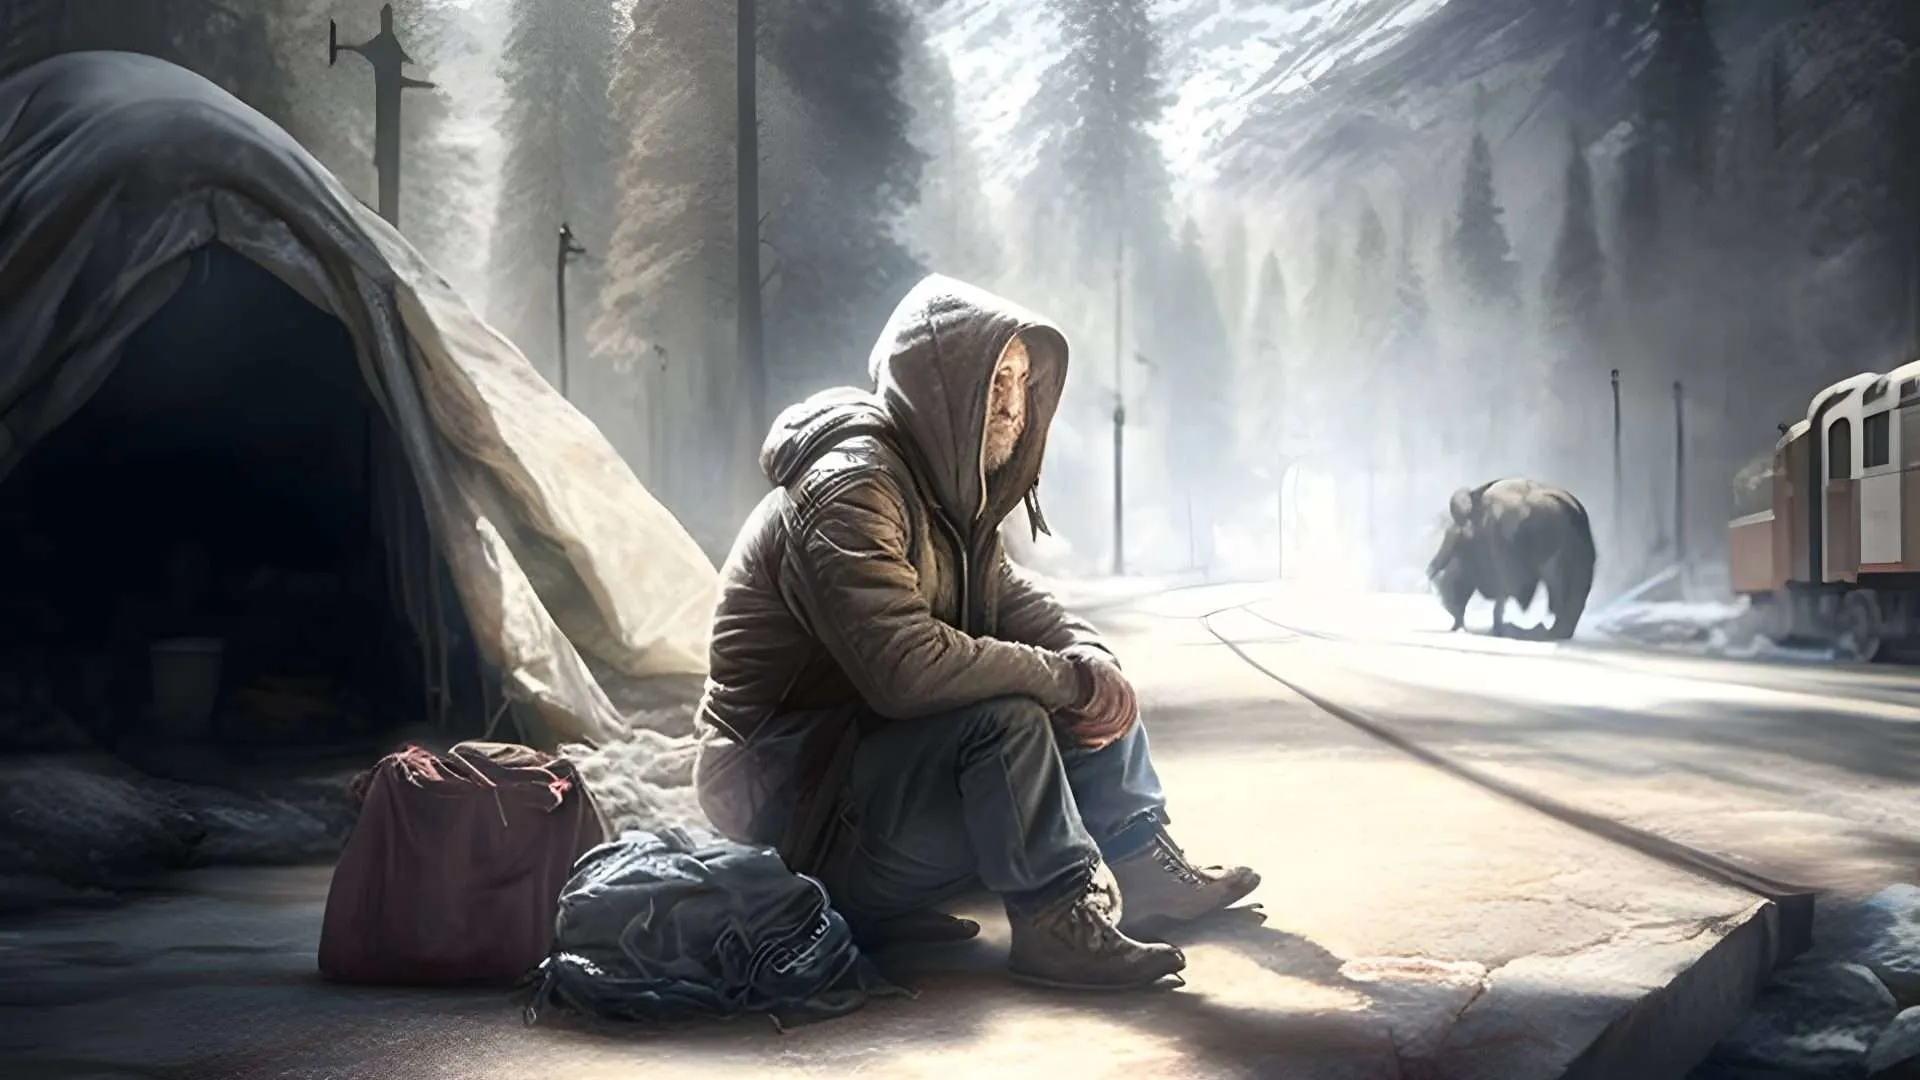 homeless man sitting on sidewalk